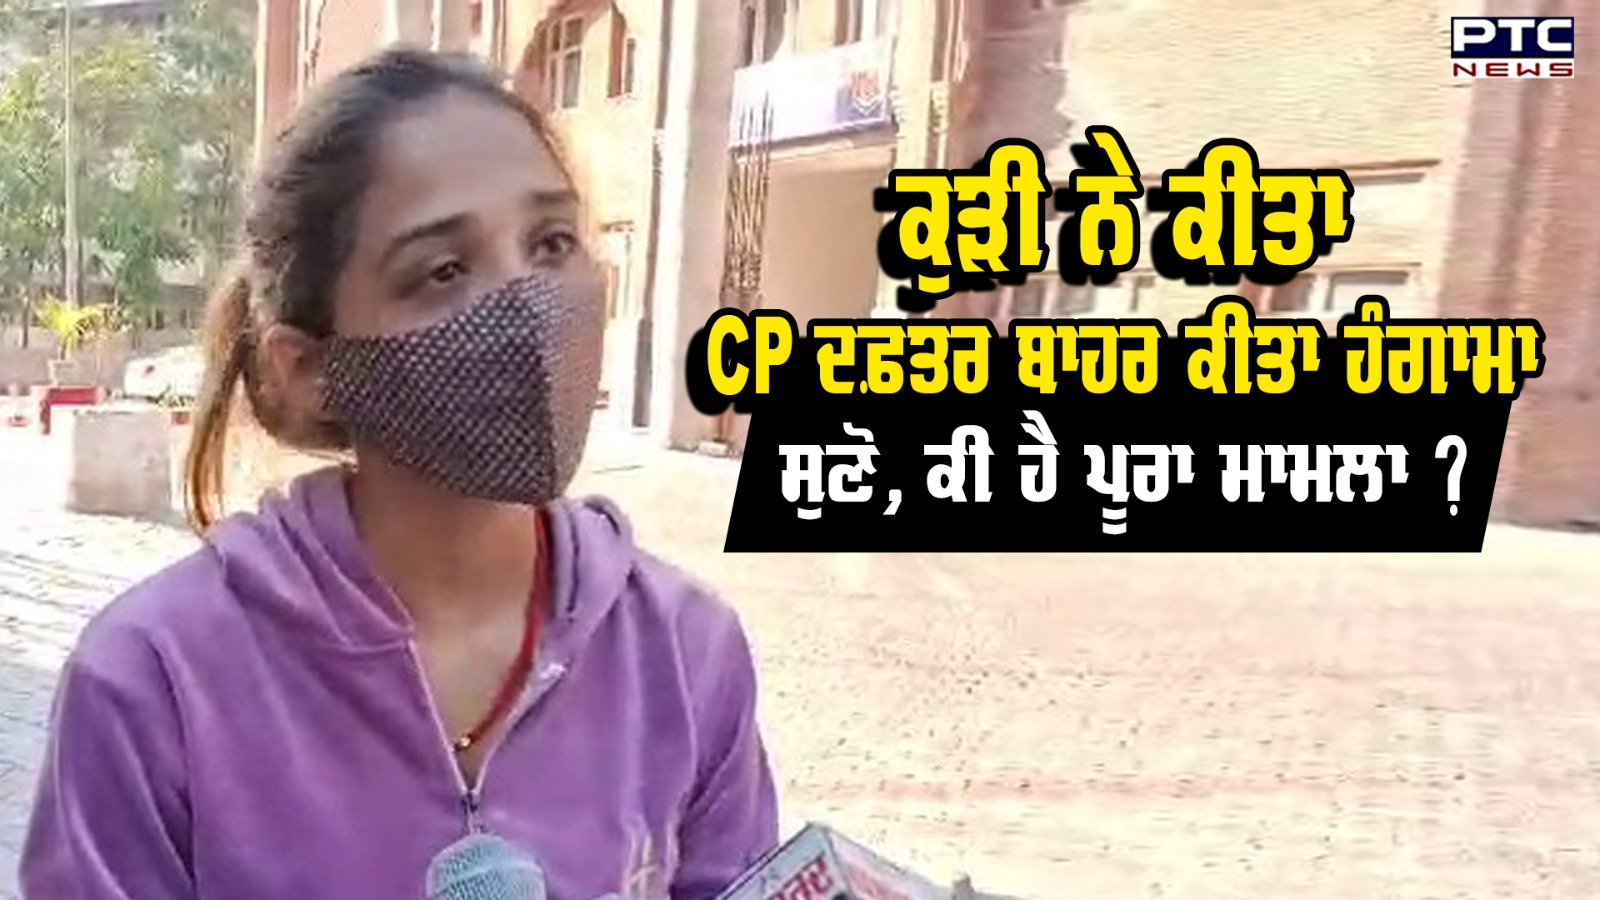 Amritsar: ਕੁੜੀ ਨੇ ਕੀਤਾ CP ਦਫ਼ਤਰ ਬਾਹਰ ਕੀਤਾ ਹੰਗਾਮਾ ਸੁਣੋ, ਕੀ ਪੂਰਾ ਮਾਮਲਾ ?